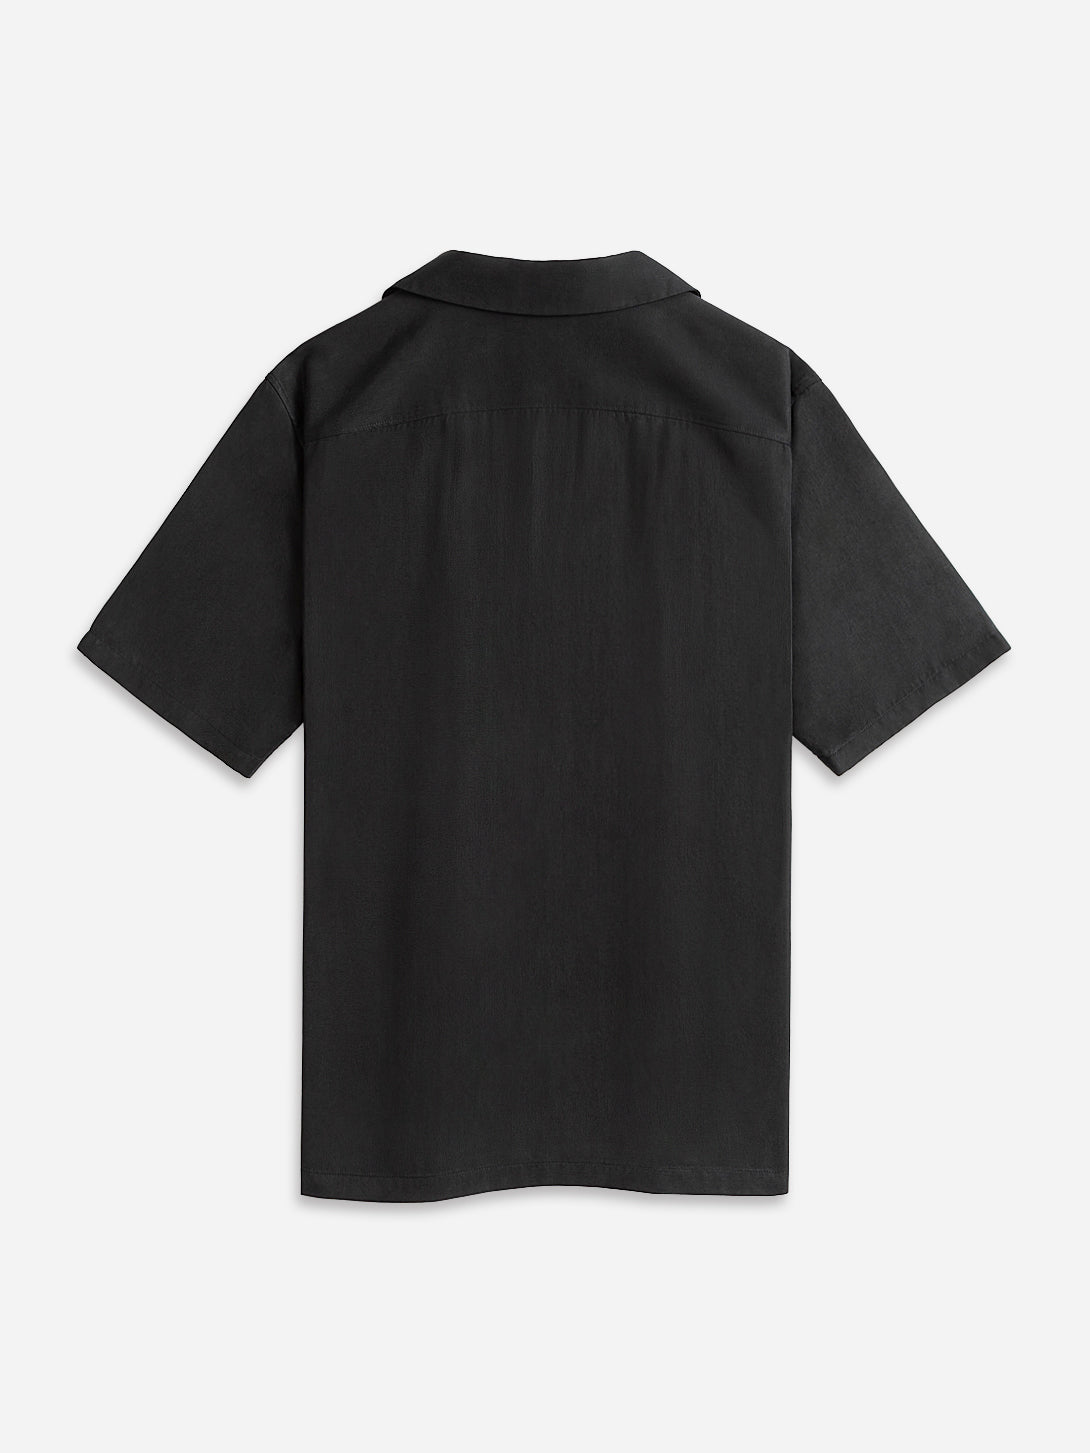 Black Rockaway Tencel Shirt Men's O.N.S SS23